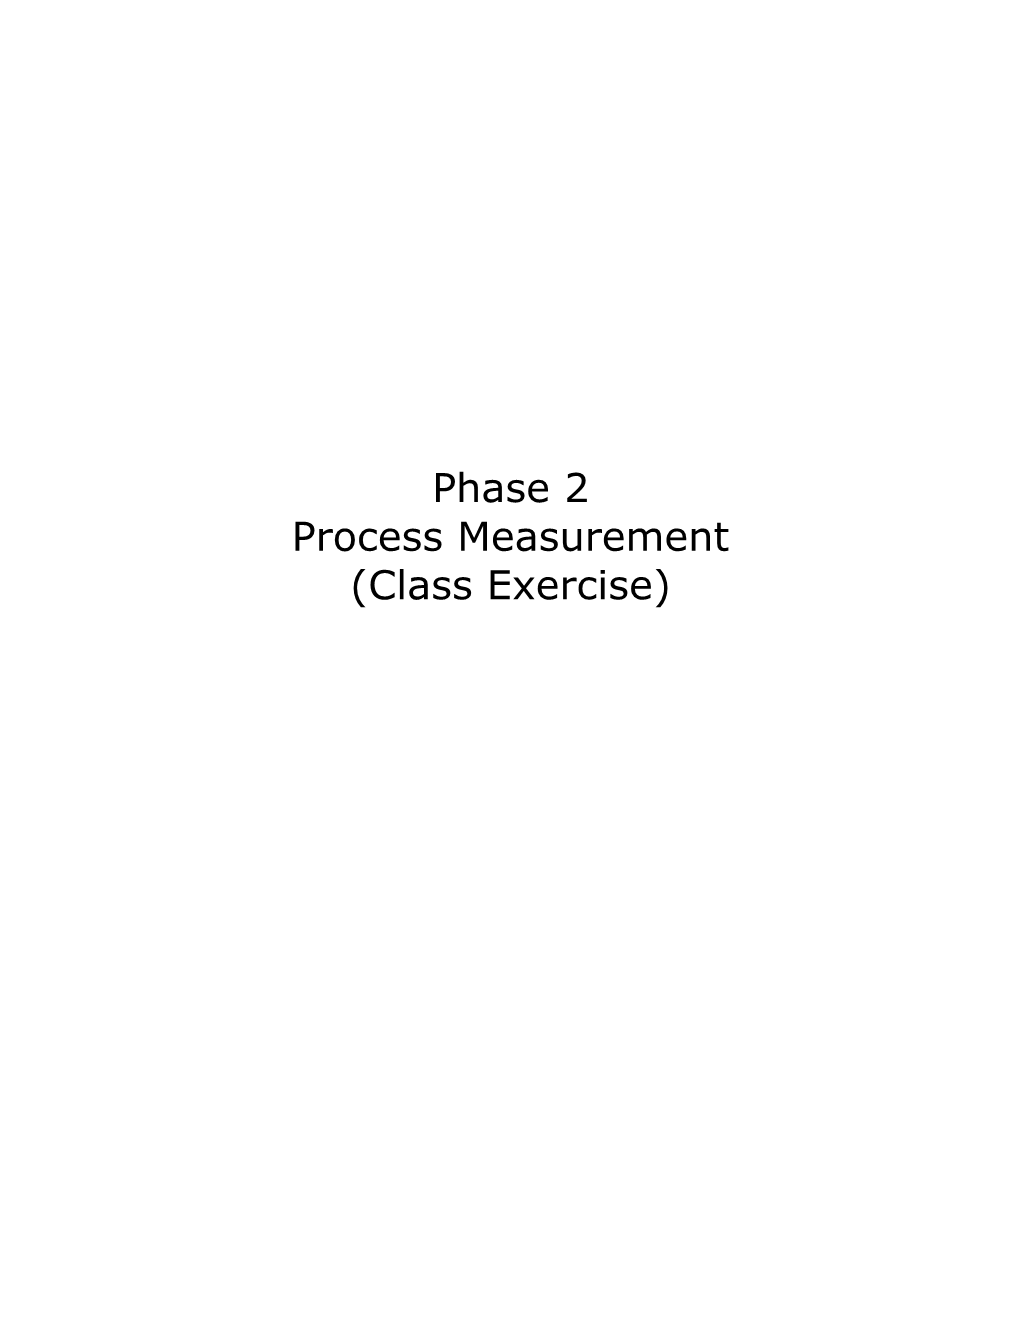 Phase 2: Process Measurement